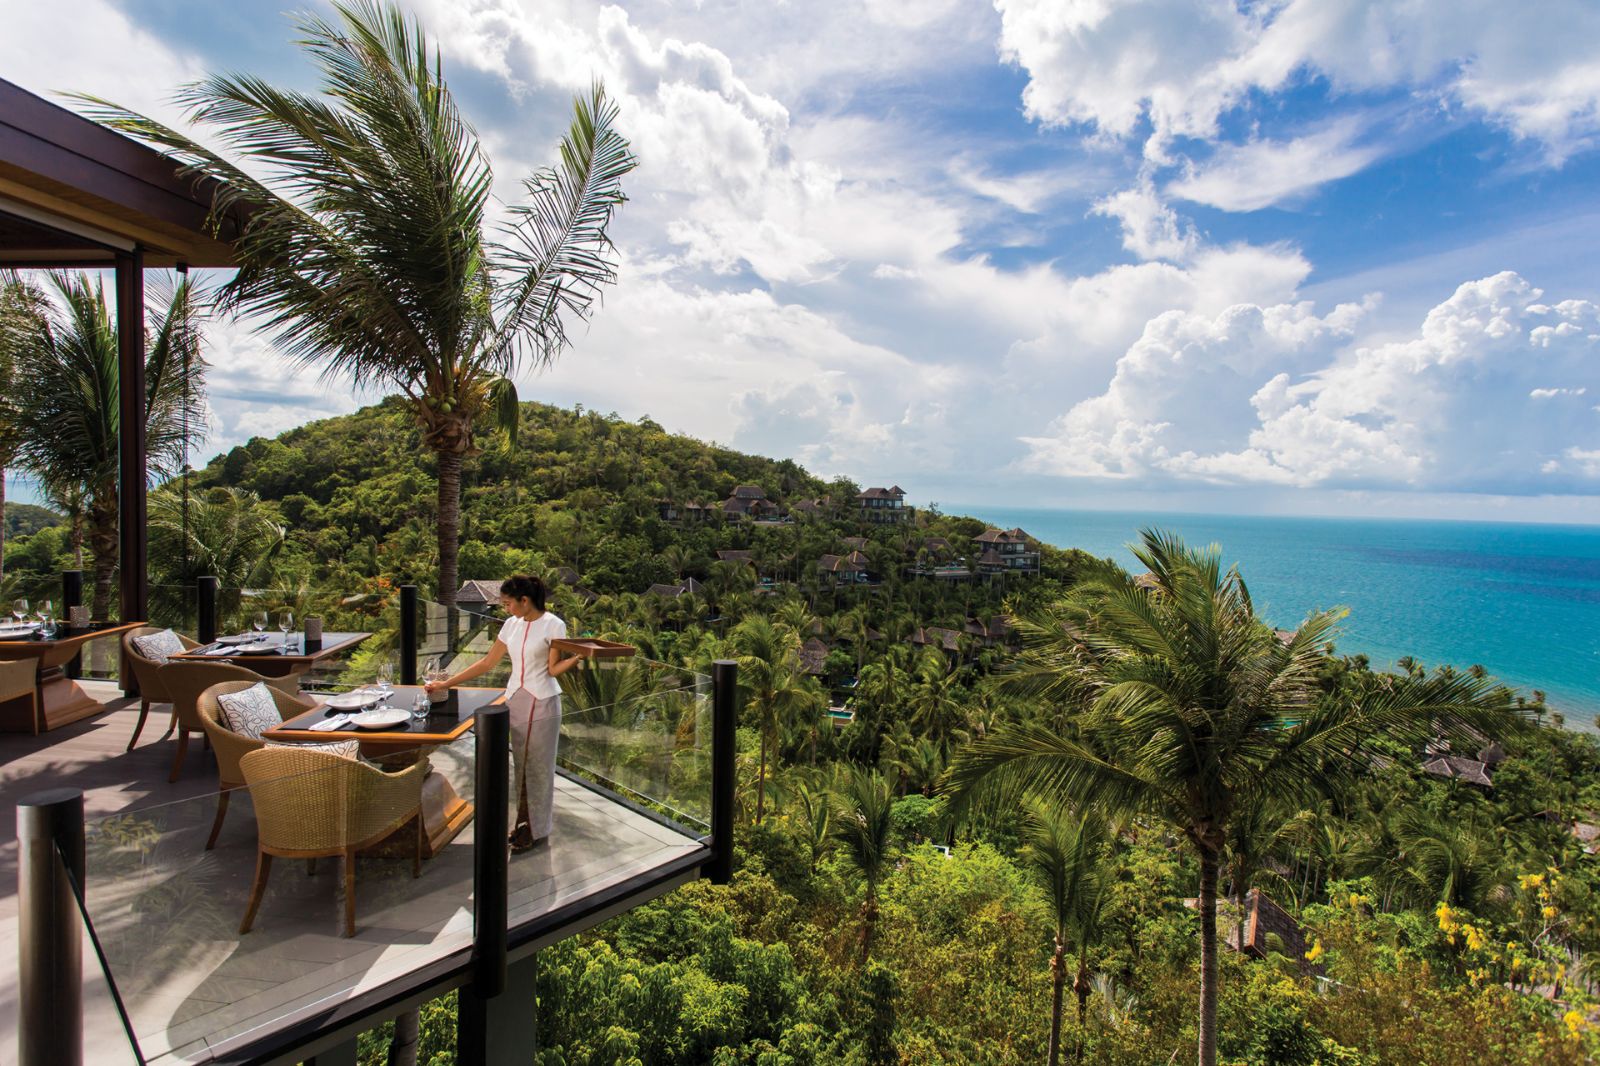 Seating terrace area at Four Seasons Resort Koh Samui in Thailand